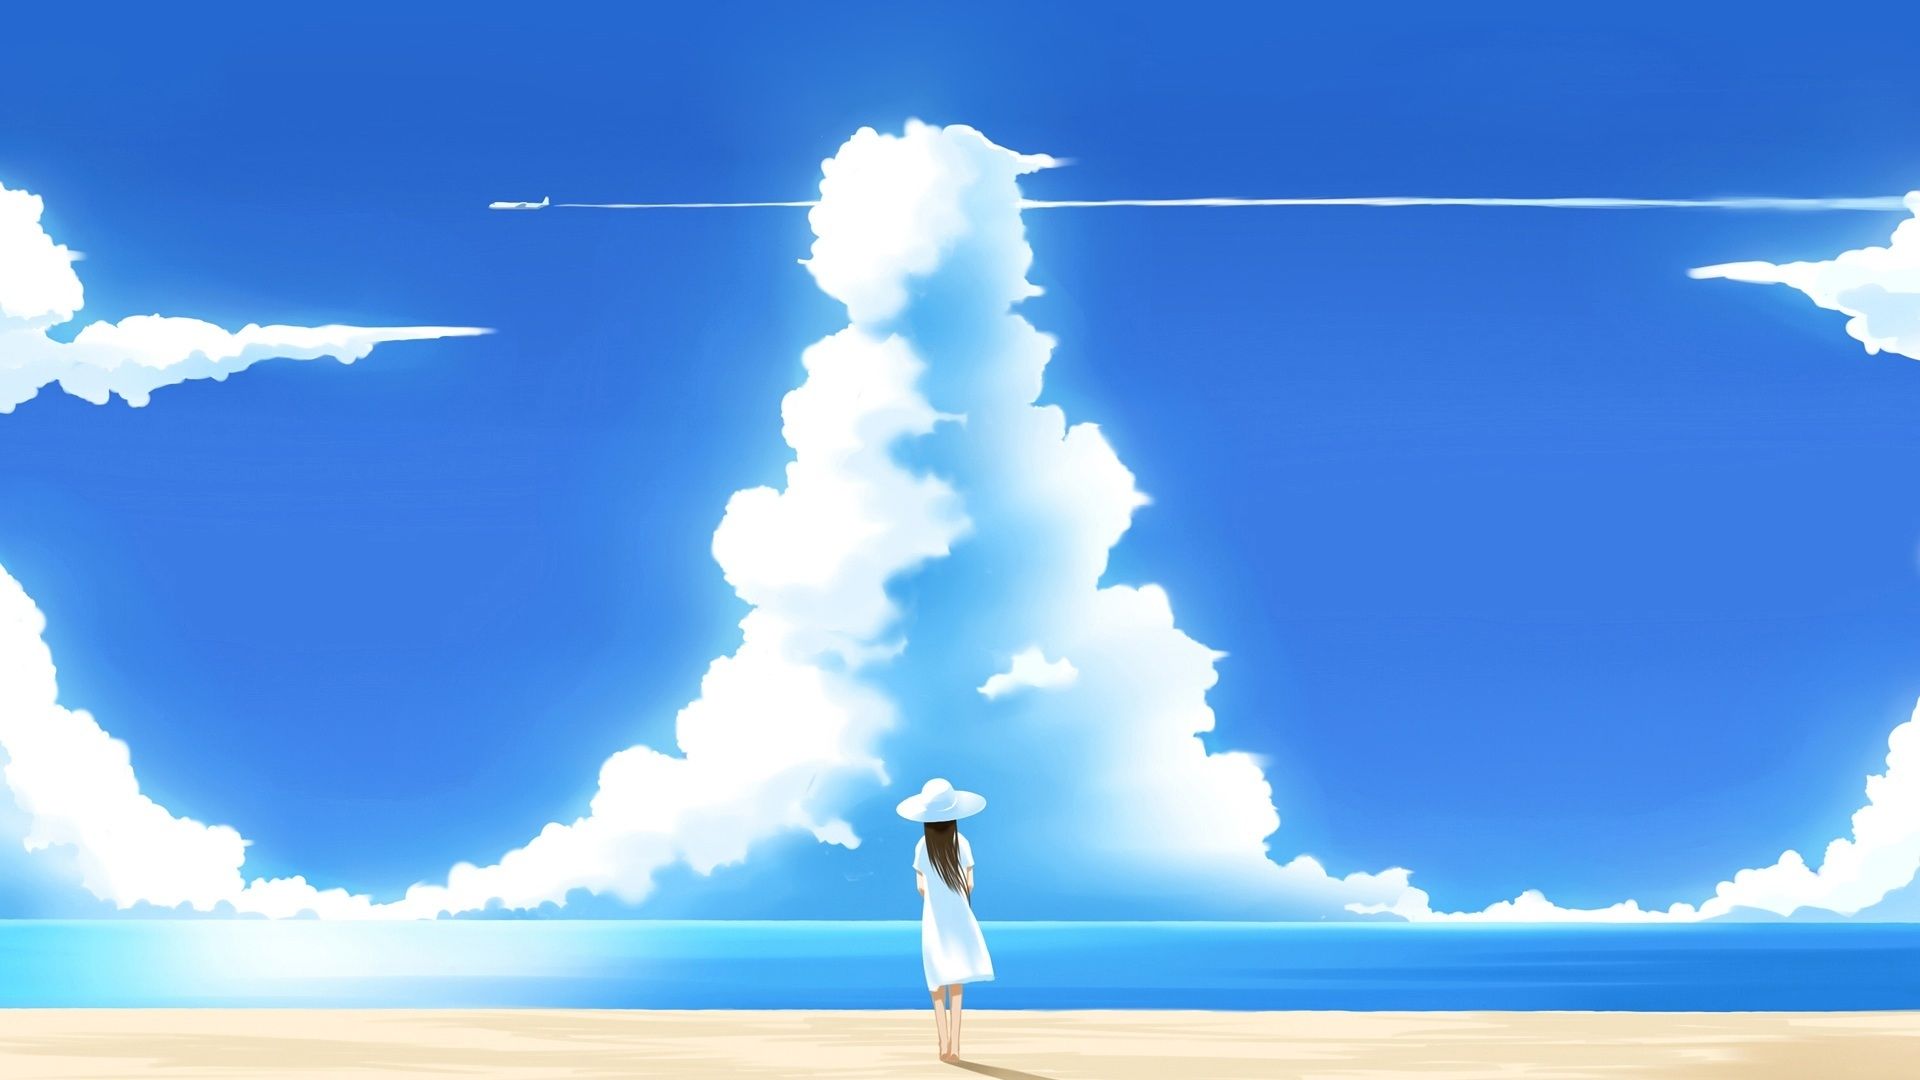 Unique Anime Beach Wallpaper. Anime scenery, Anime scenery